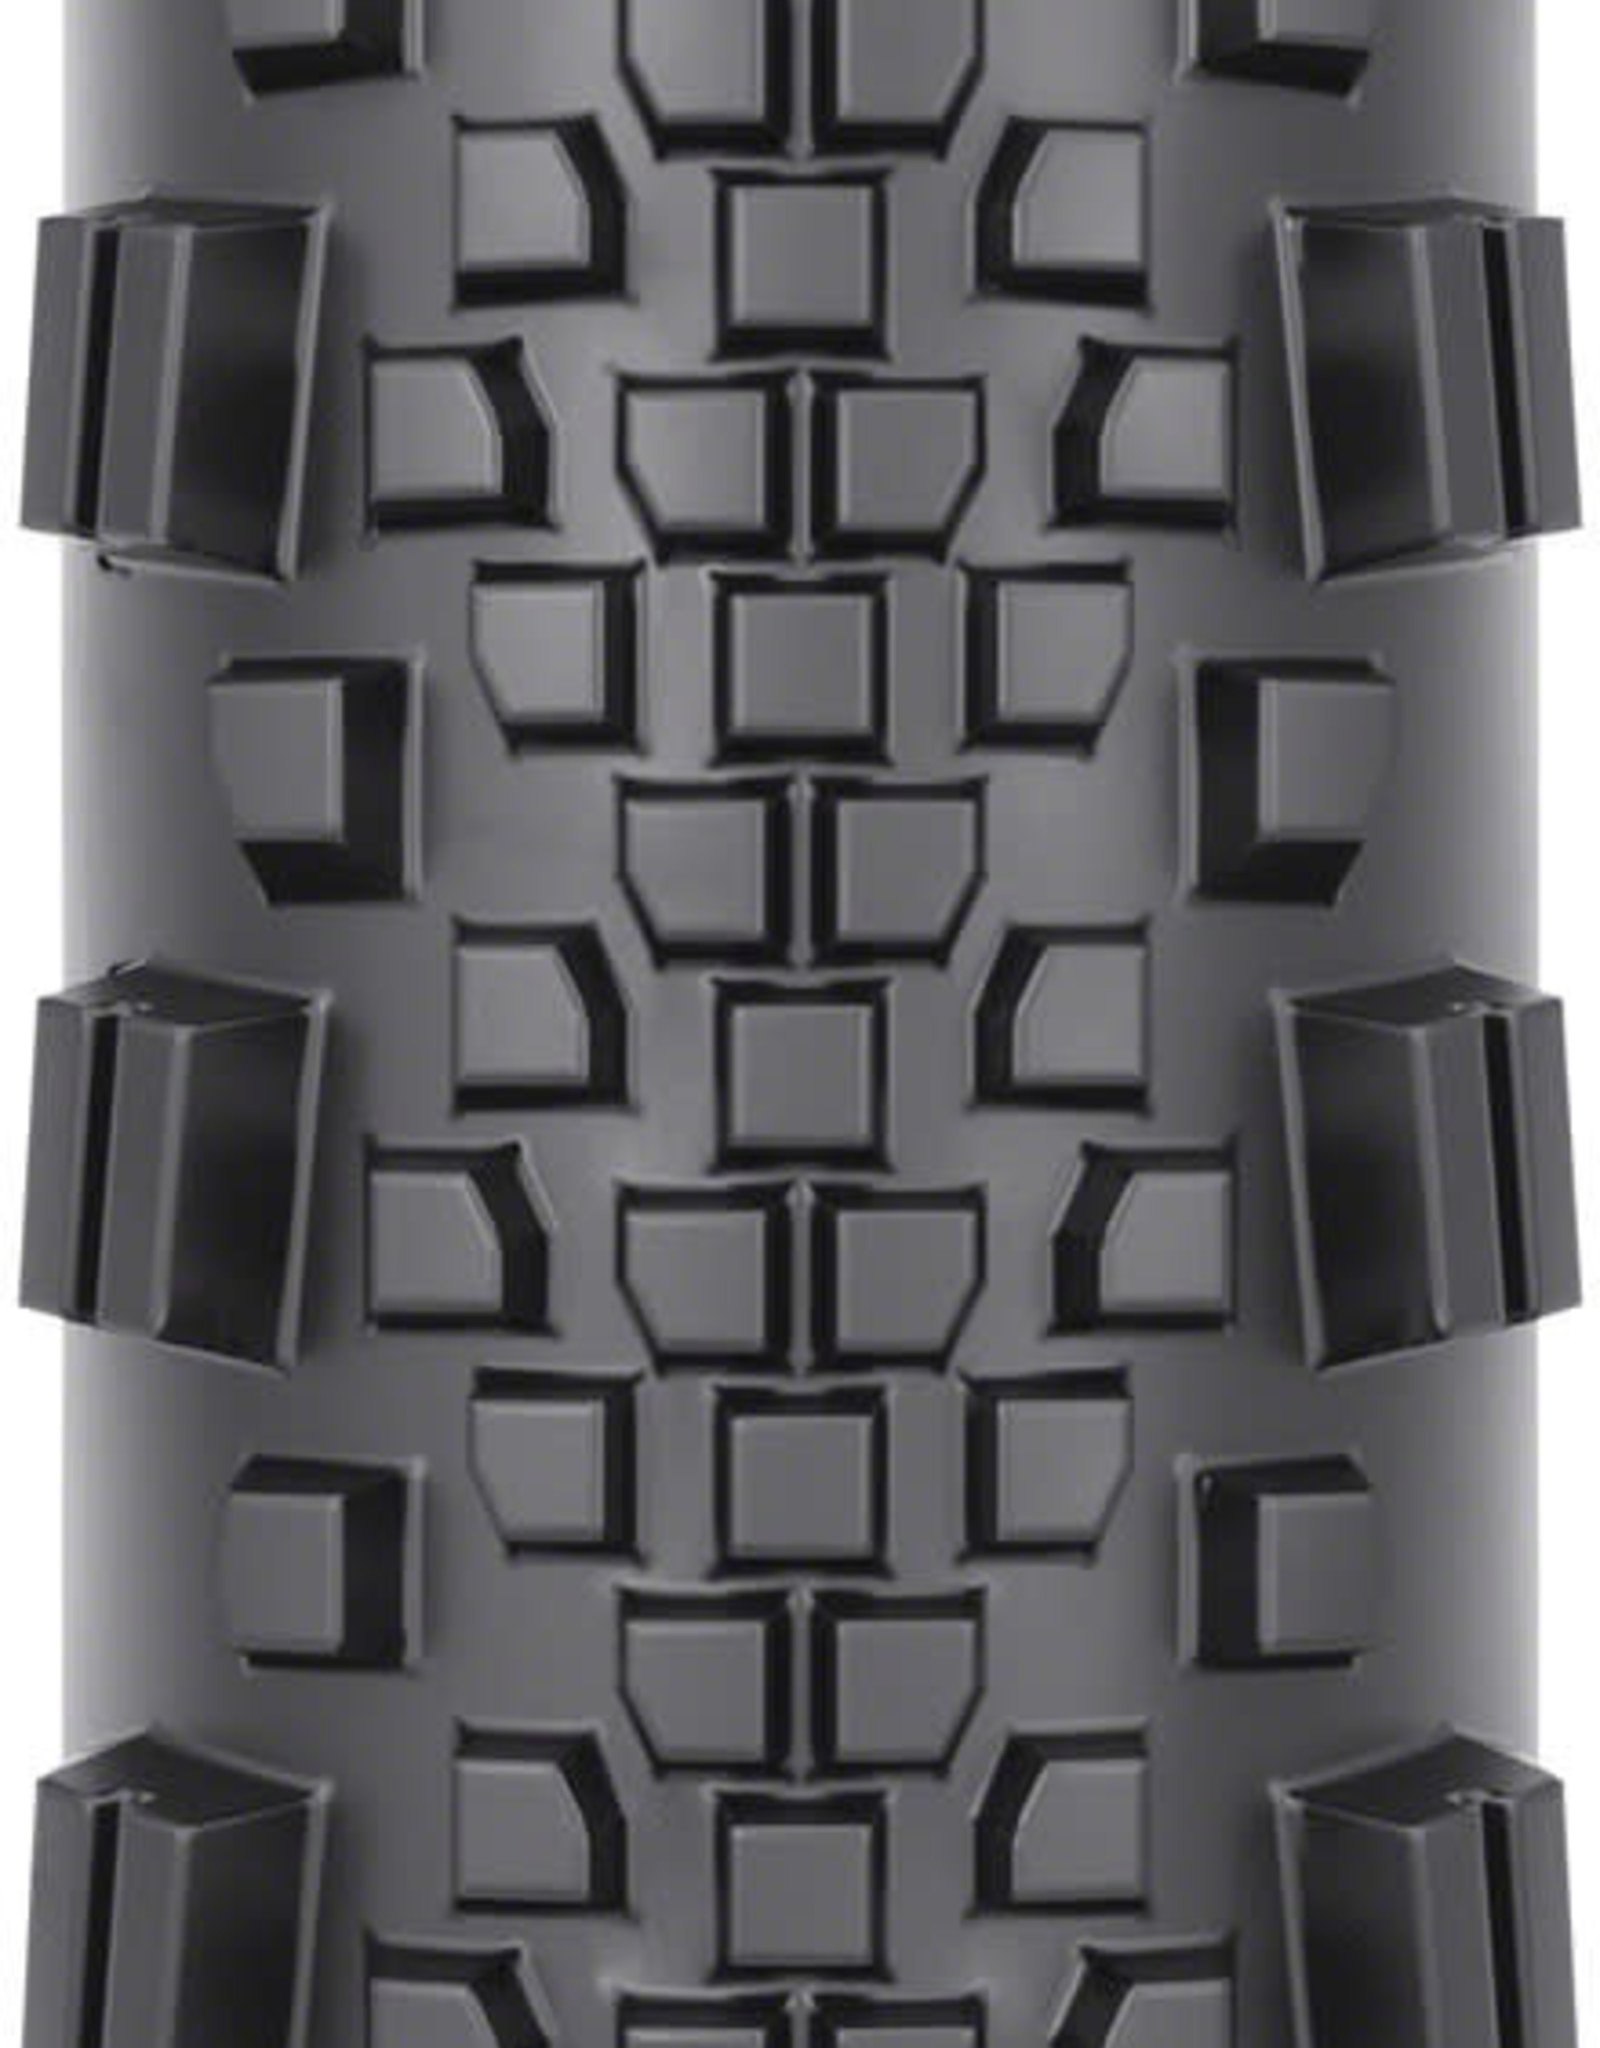 WTB Raddler Tire - 700 x 40, TCS Tubeless, Folding, Black/Tan, Light, Fast Rolling